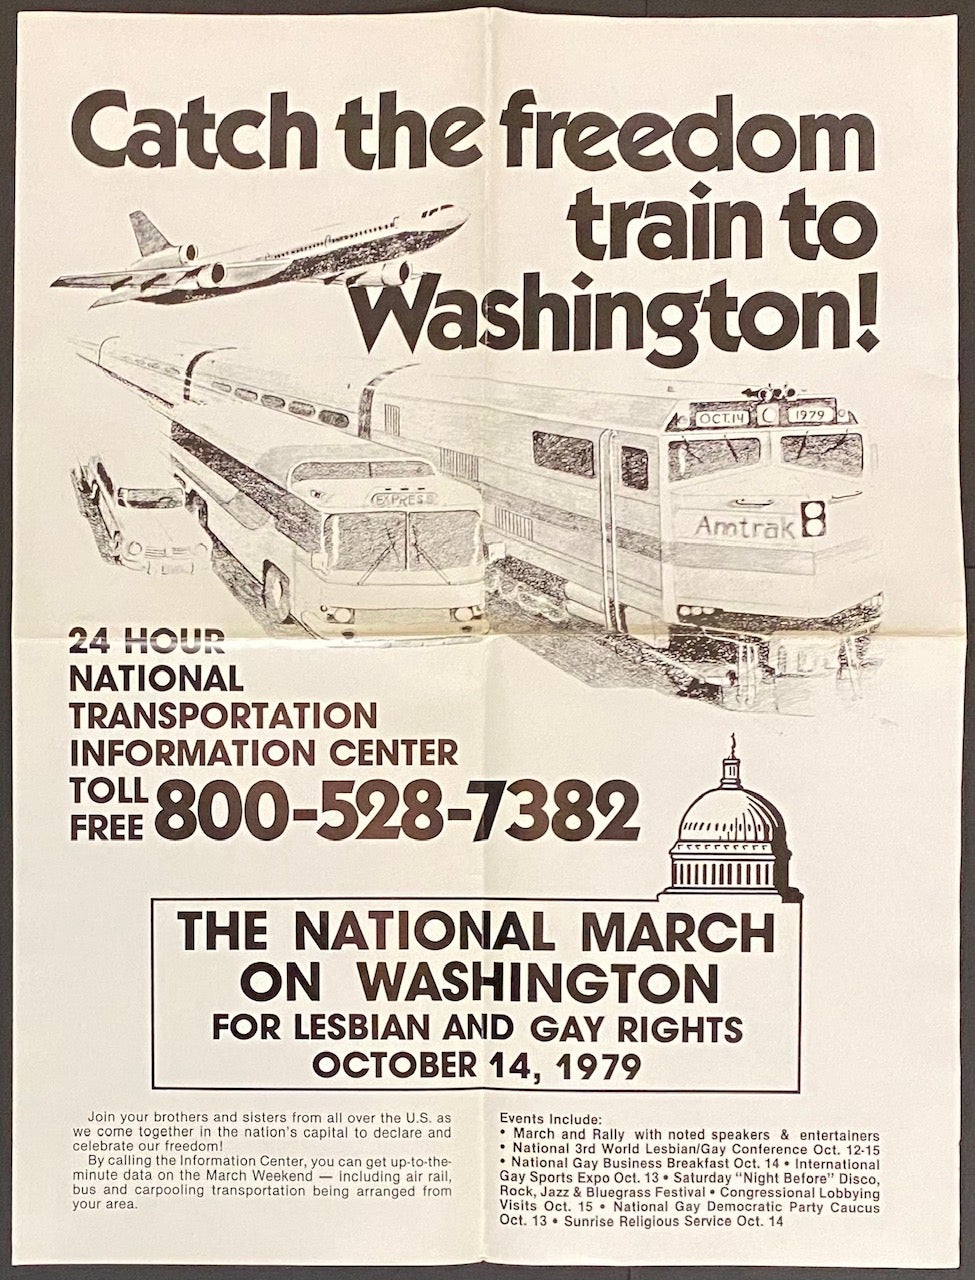 Catch the freedom train to Washington! ..